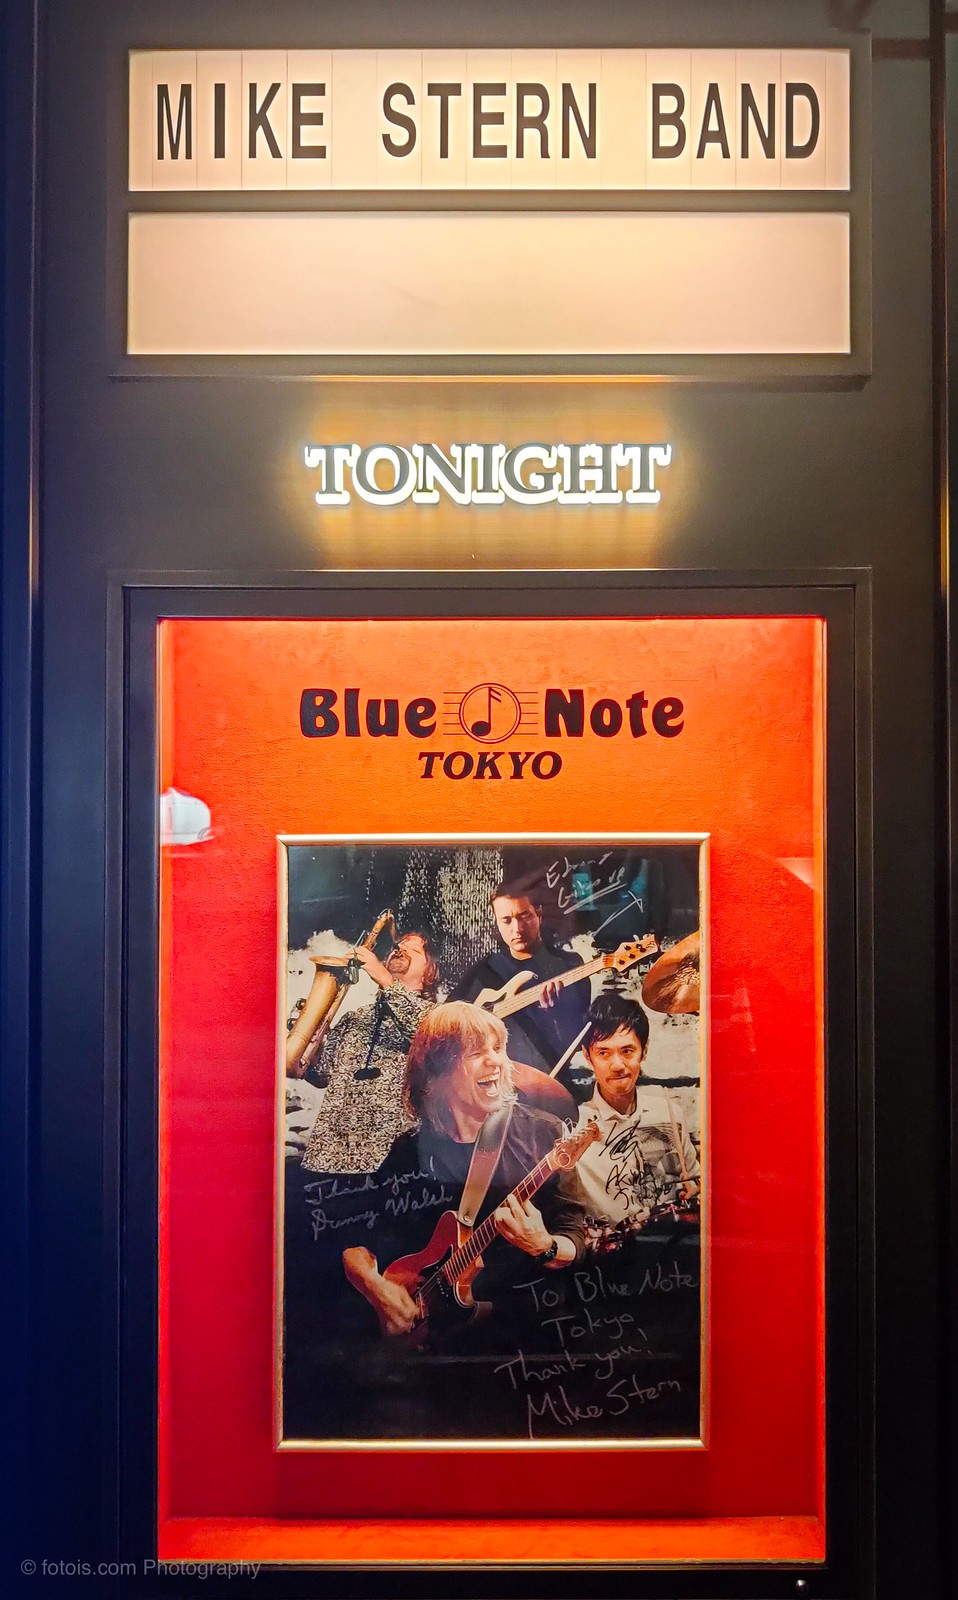 Bluenoto Tokyo - Mike Stern Band Live